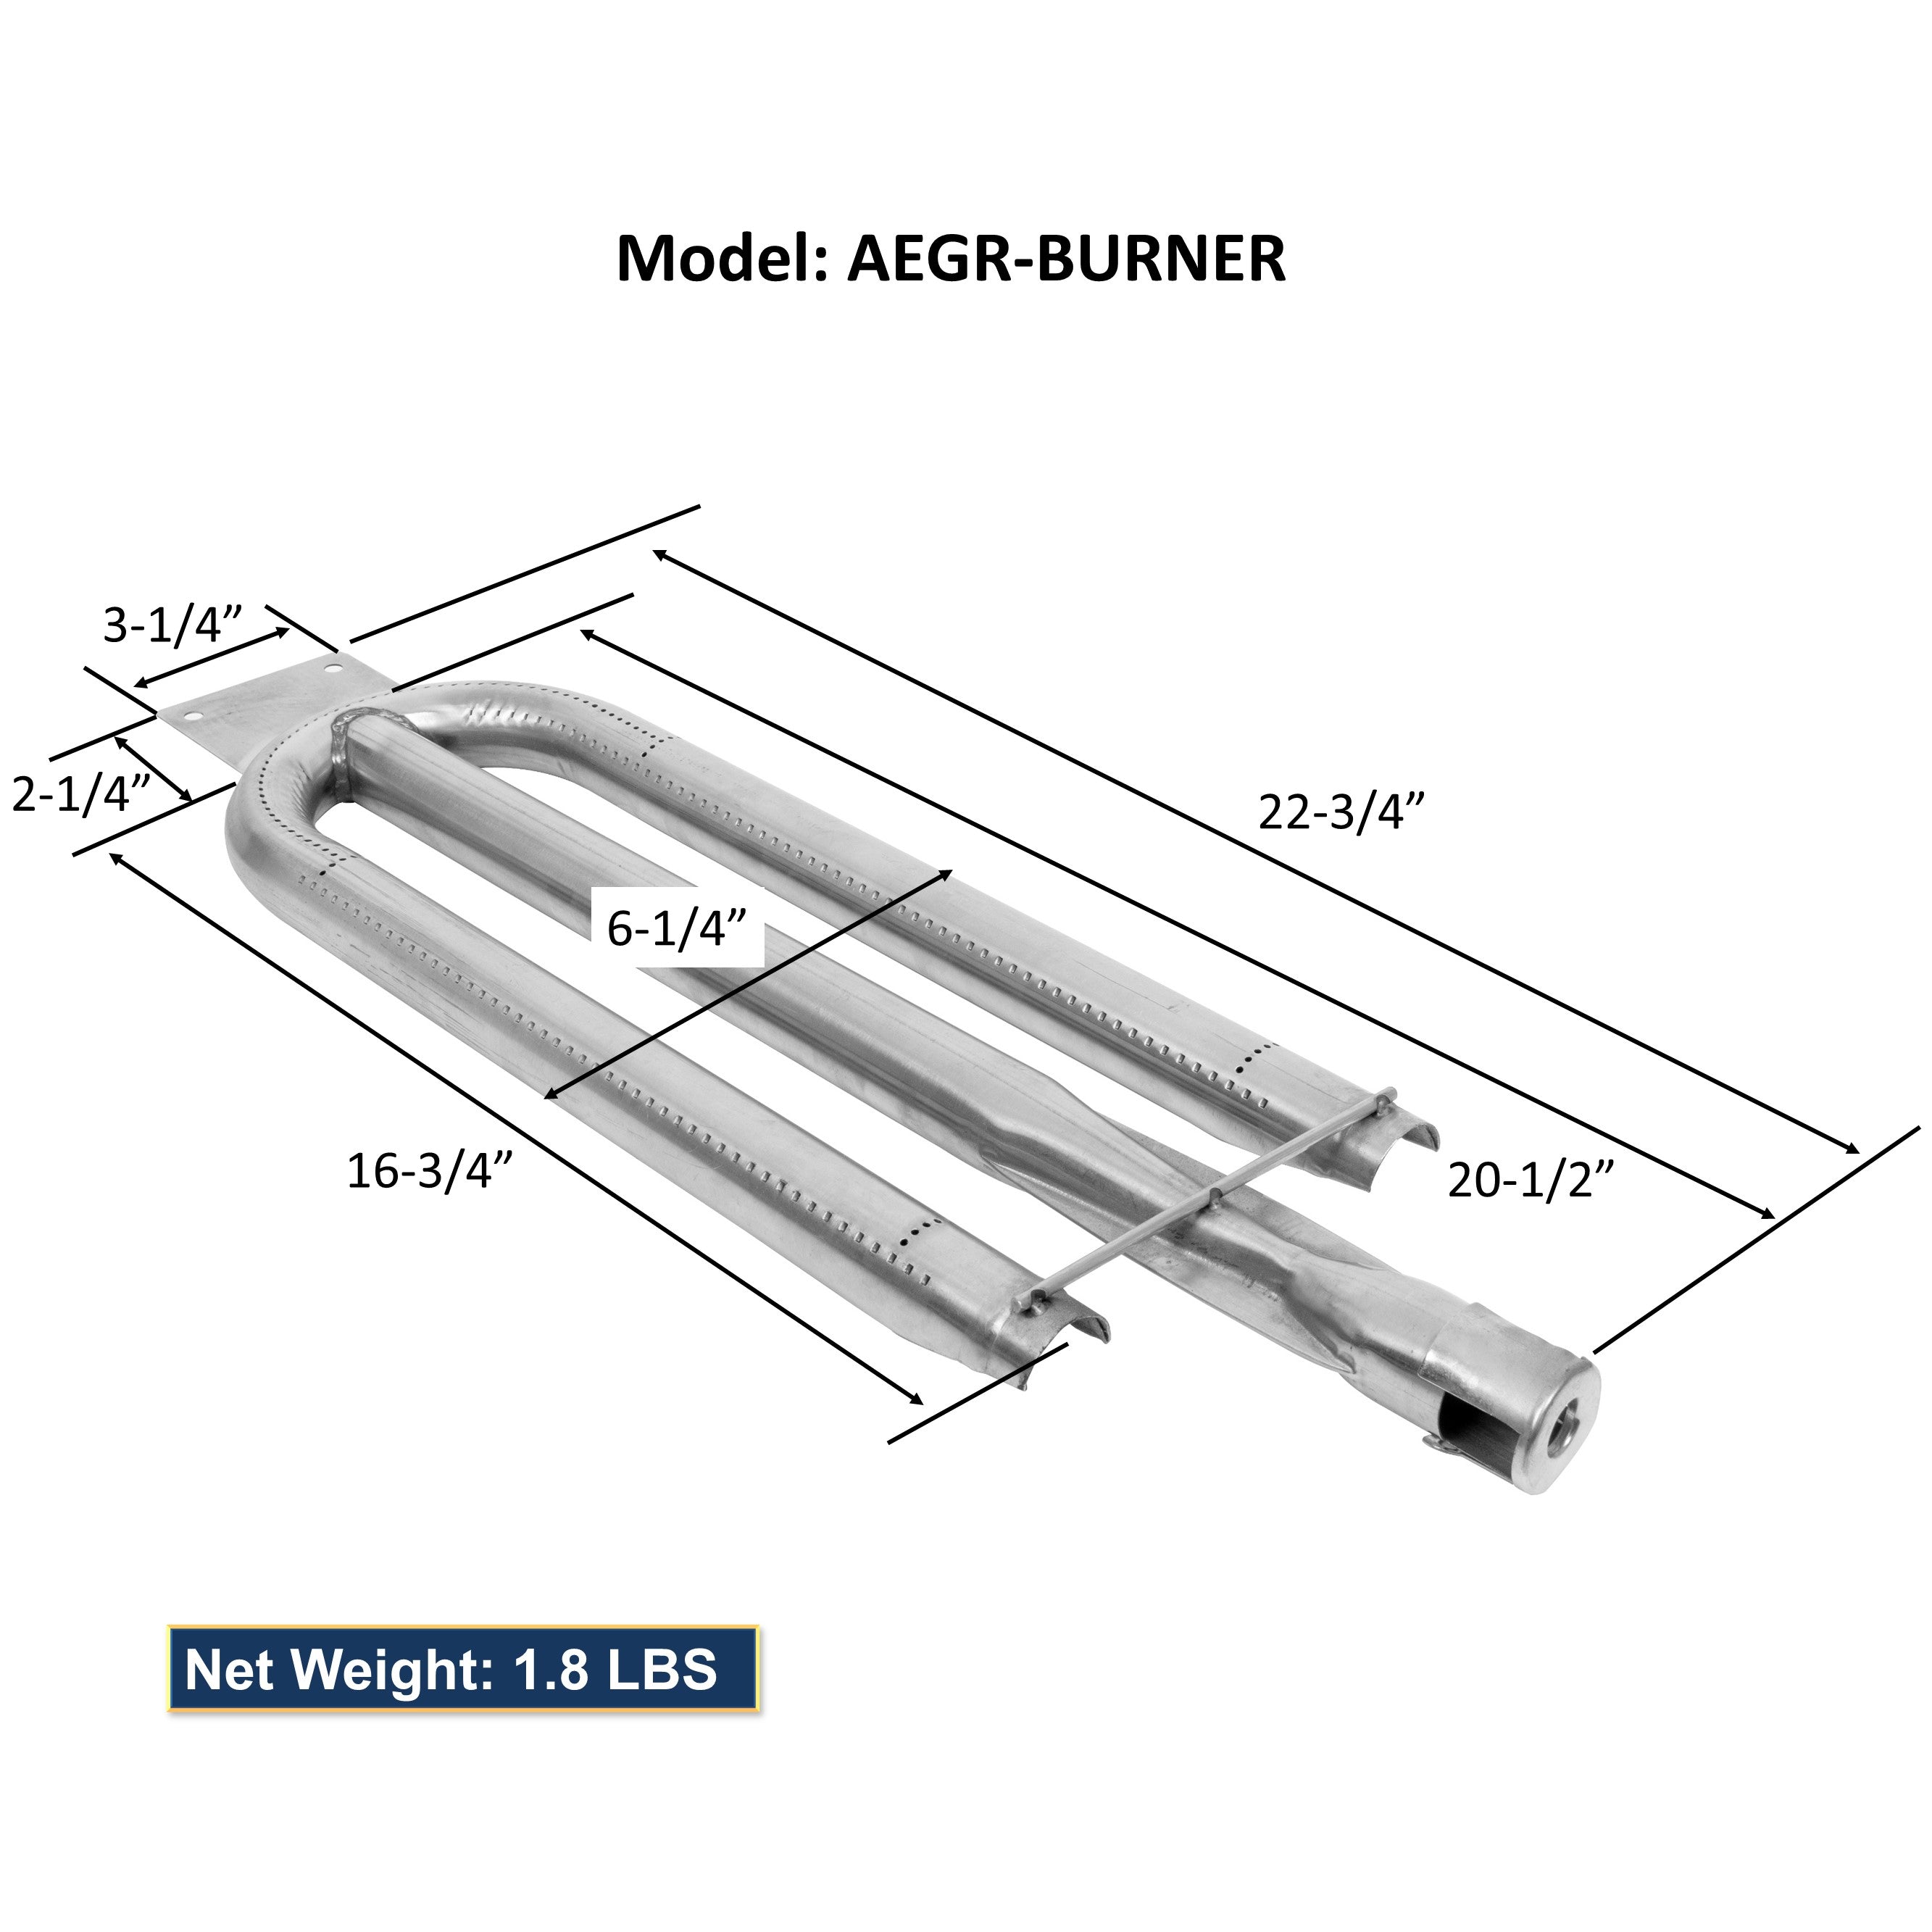 GSW AEGR-BURNER 22-3/4” x 6-1/4” U-Shaped Stainless Steel Tube Burner (24,000 BTU) for AEGR Series Commercial Countertop Griddles